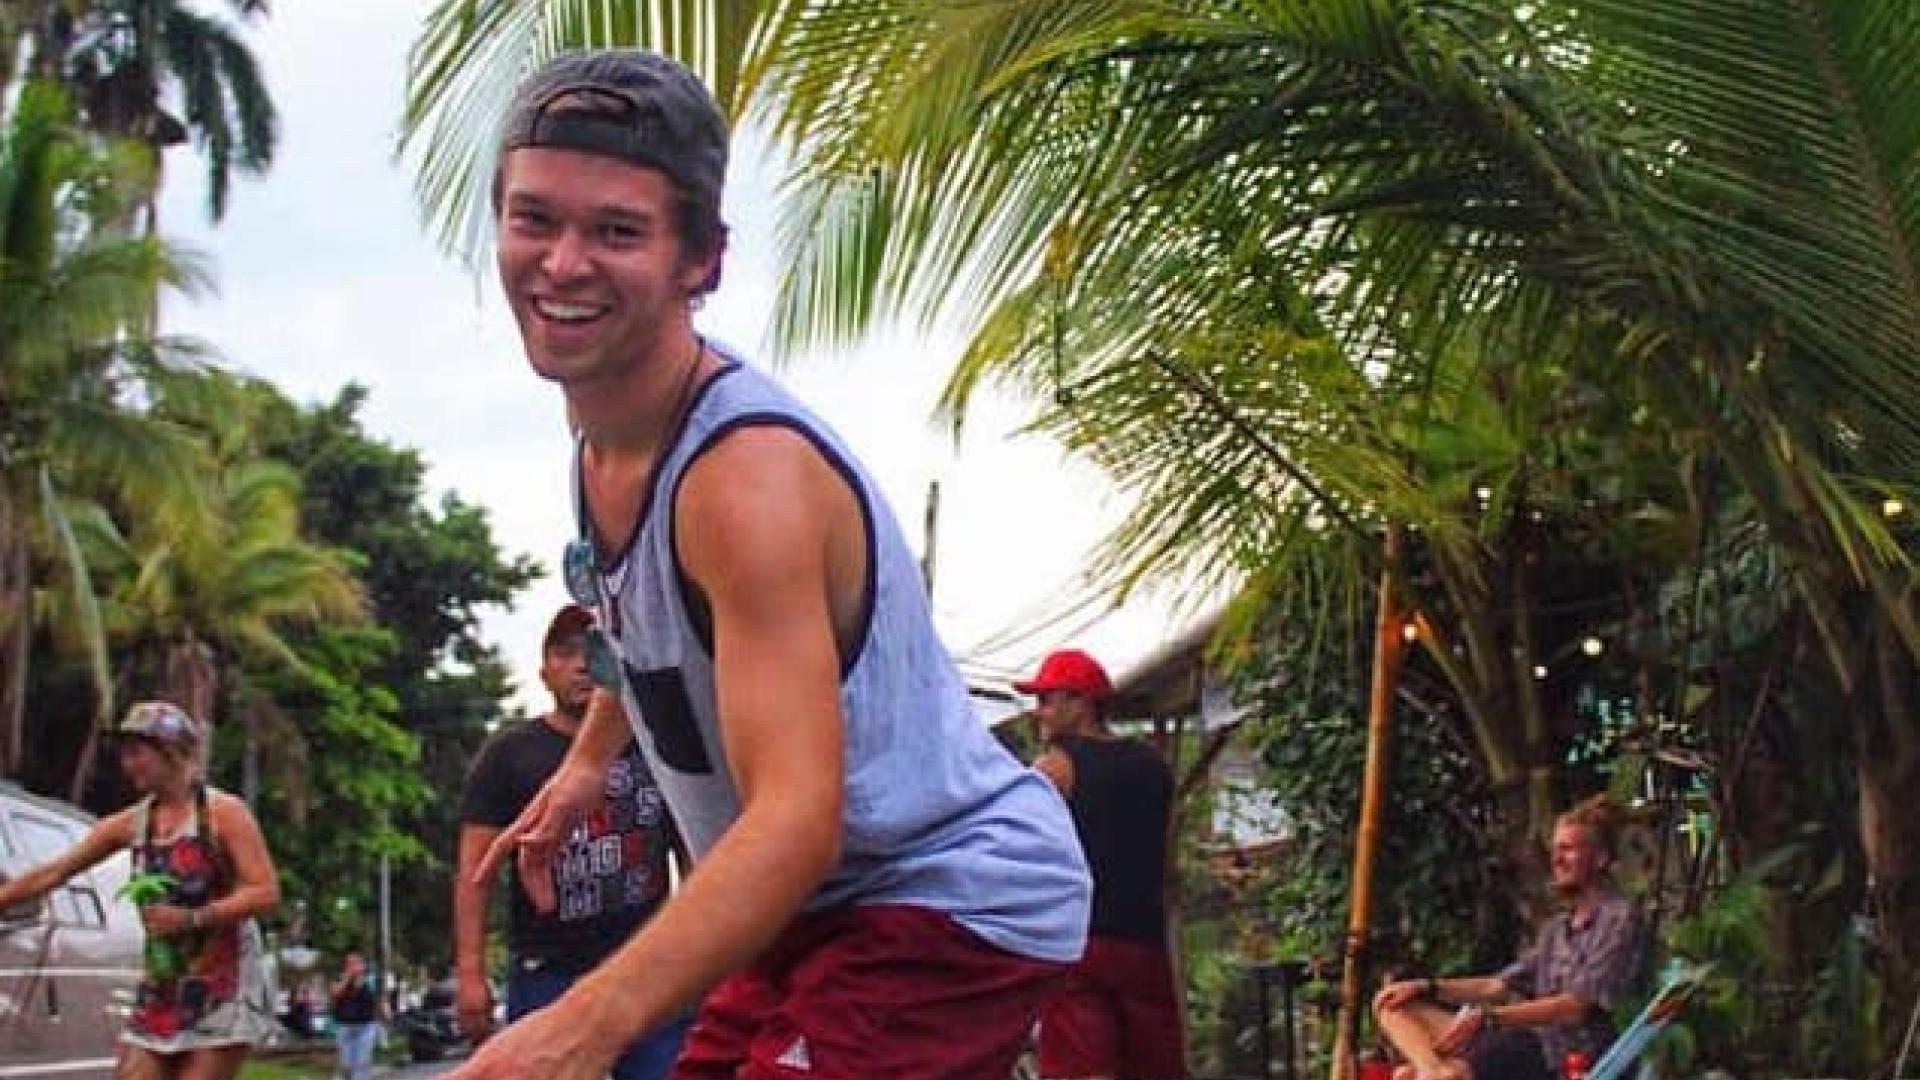 Blake Borwick rides a skateboard in Costa Rica